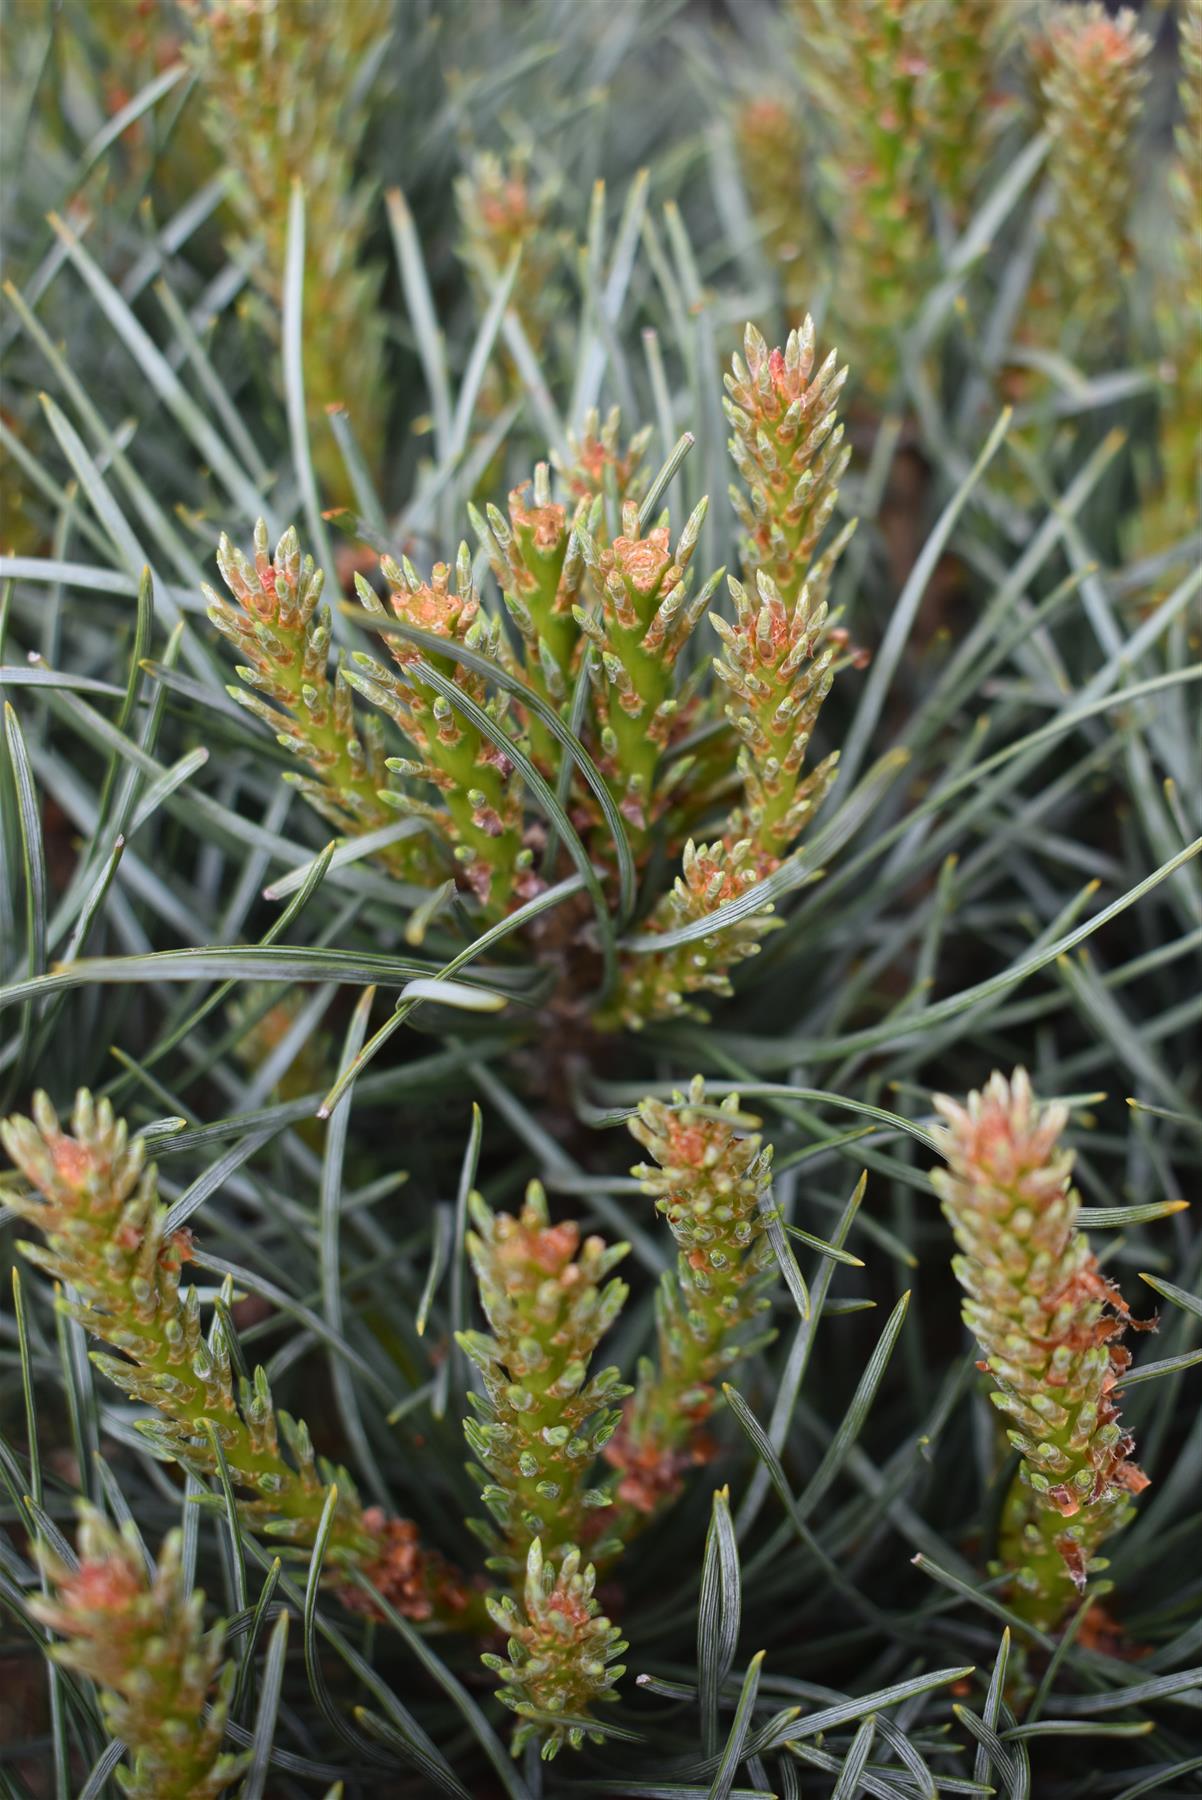 Pinus sylvestris 'Watereri' | Scots pine 'Watereri' - Height 40cm - Width - 50cm  - 15lt